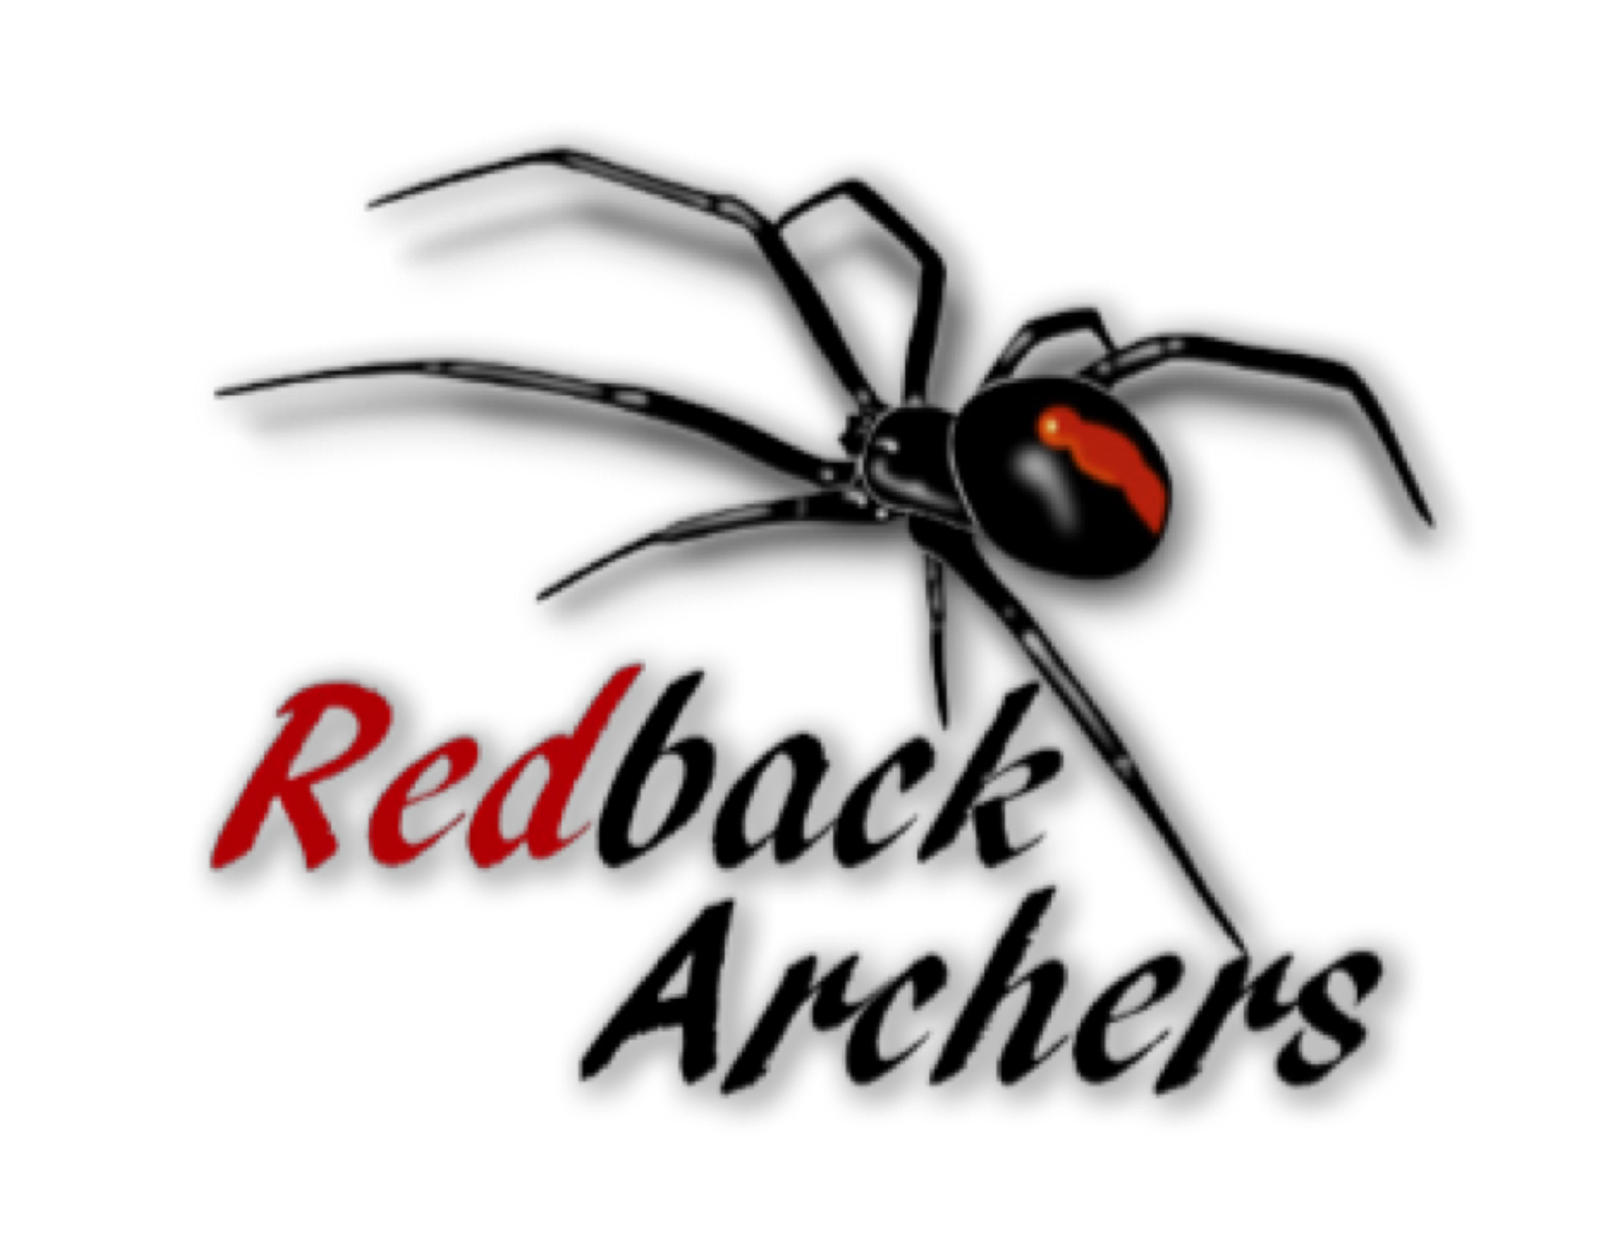 Redback Archers